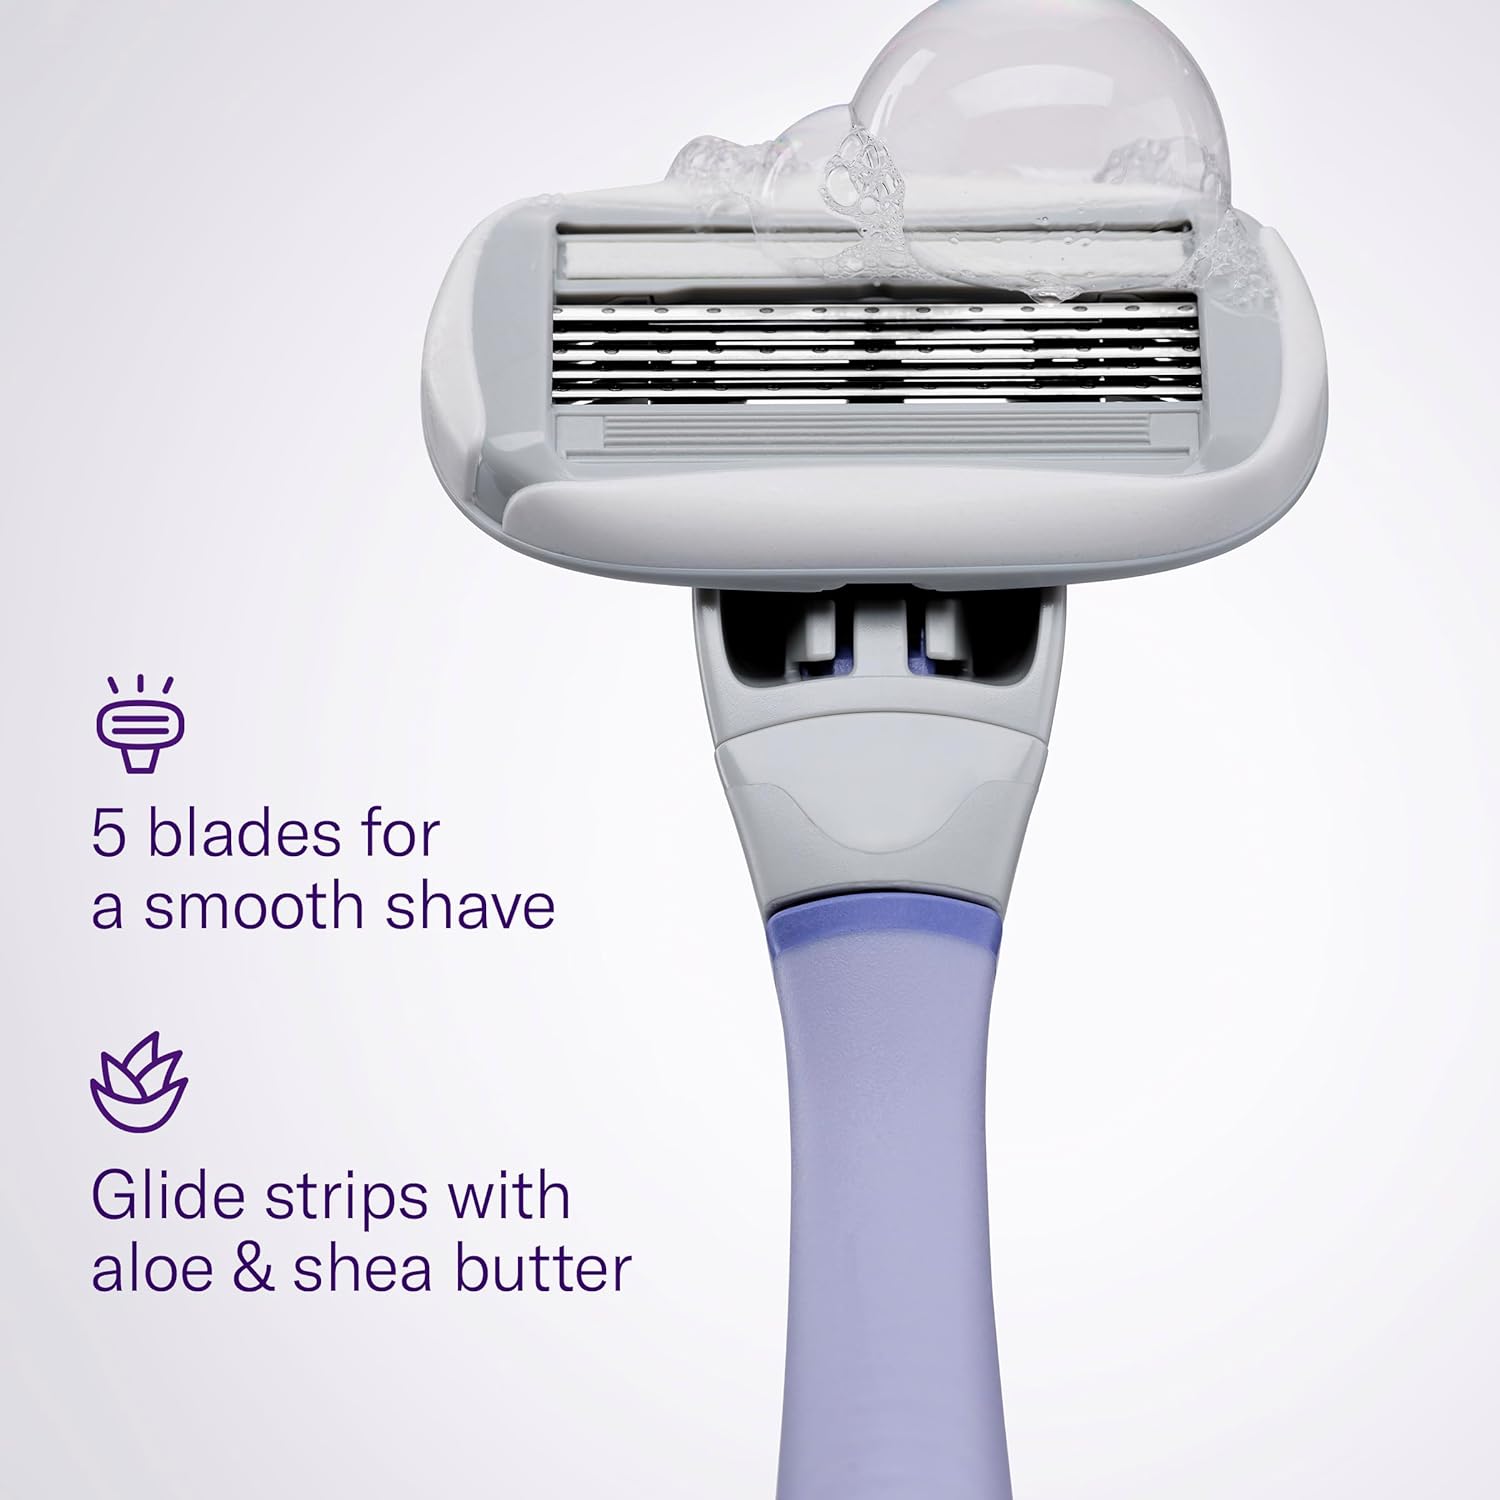 FLAMINGO 5-Blade Razors for Women - 1 Razor Handle + 1oz Foaming Shave Gel + 1 Shower Holder - Lilac : Beauty & Personal Care